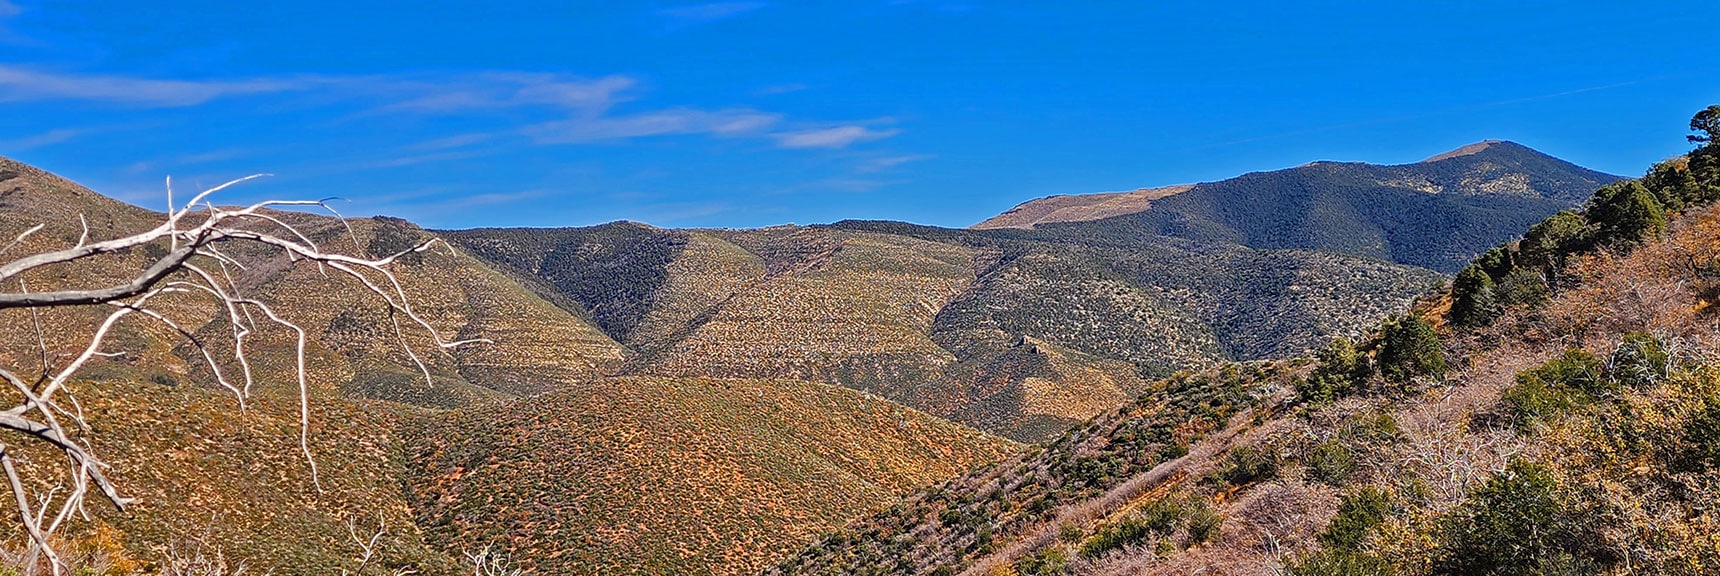 Begin Initial Descent Toward Wash at Base of Lovell Canyon. | Griffith Shadow Loop | Lovell Canyon, Nevada